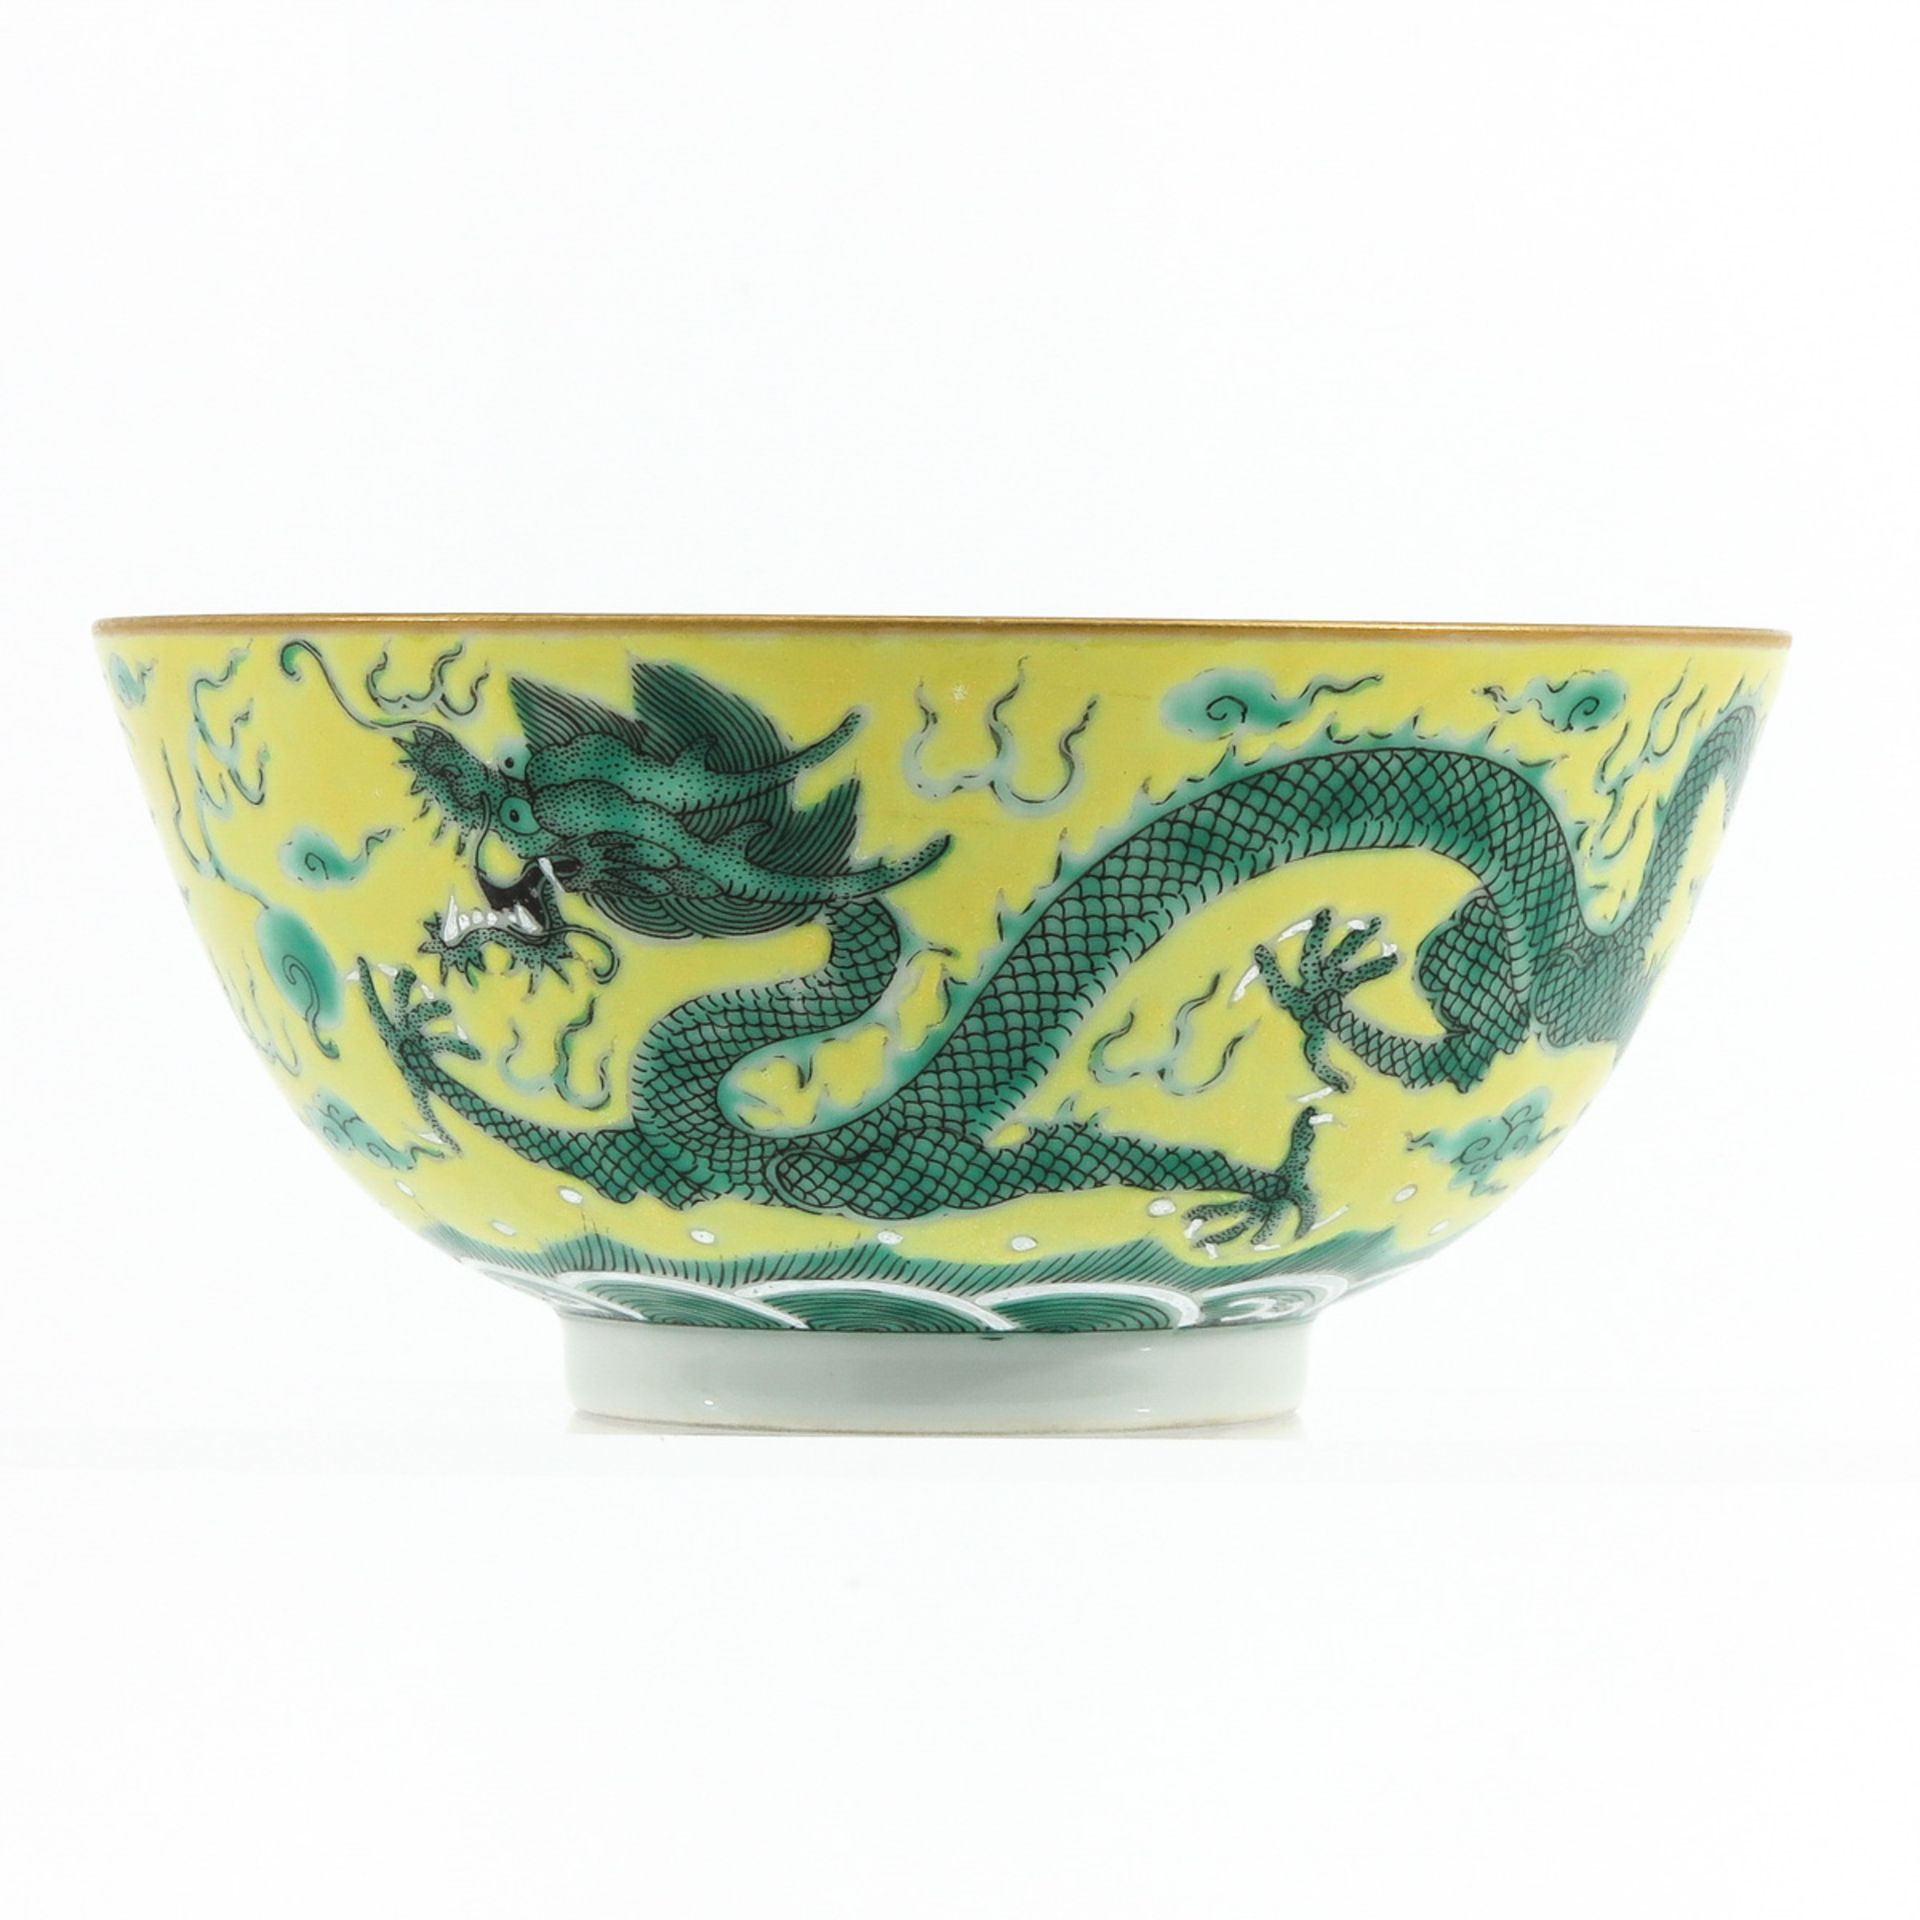 A Dragon Decor Bowl - Image 3 of 9